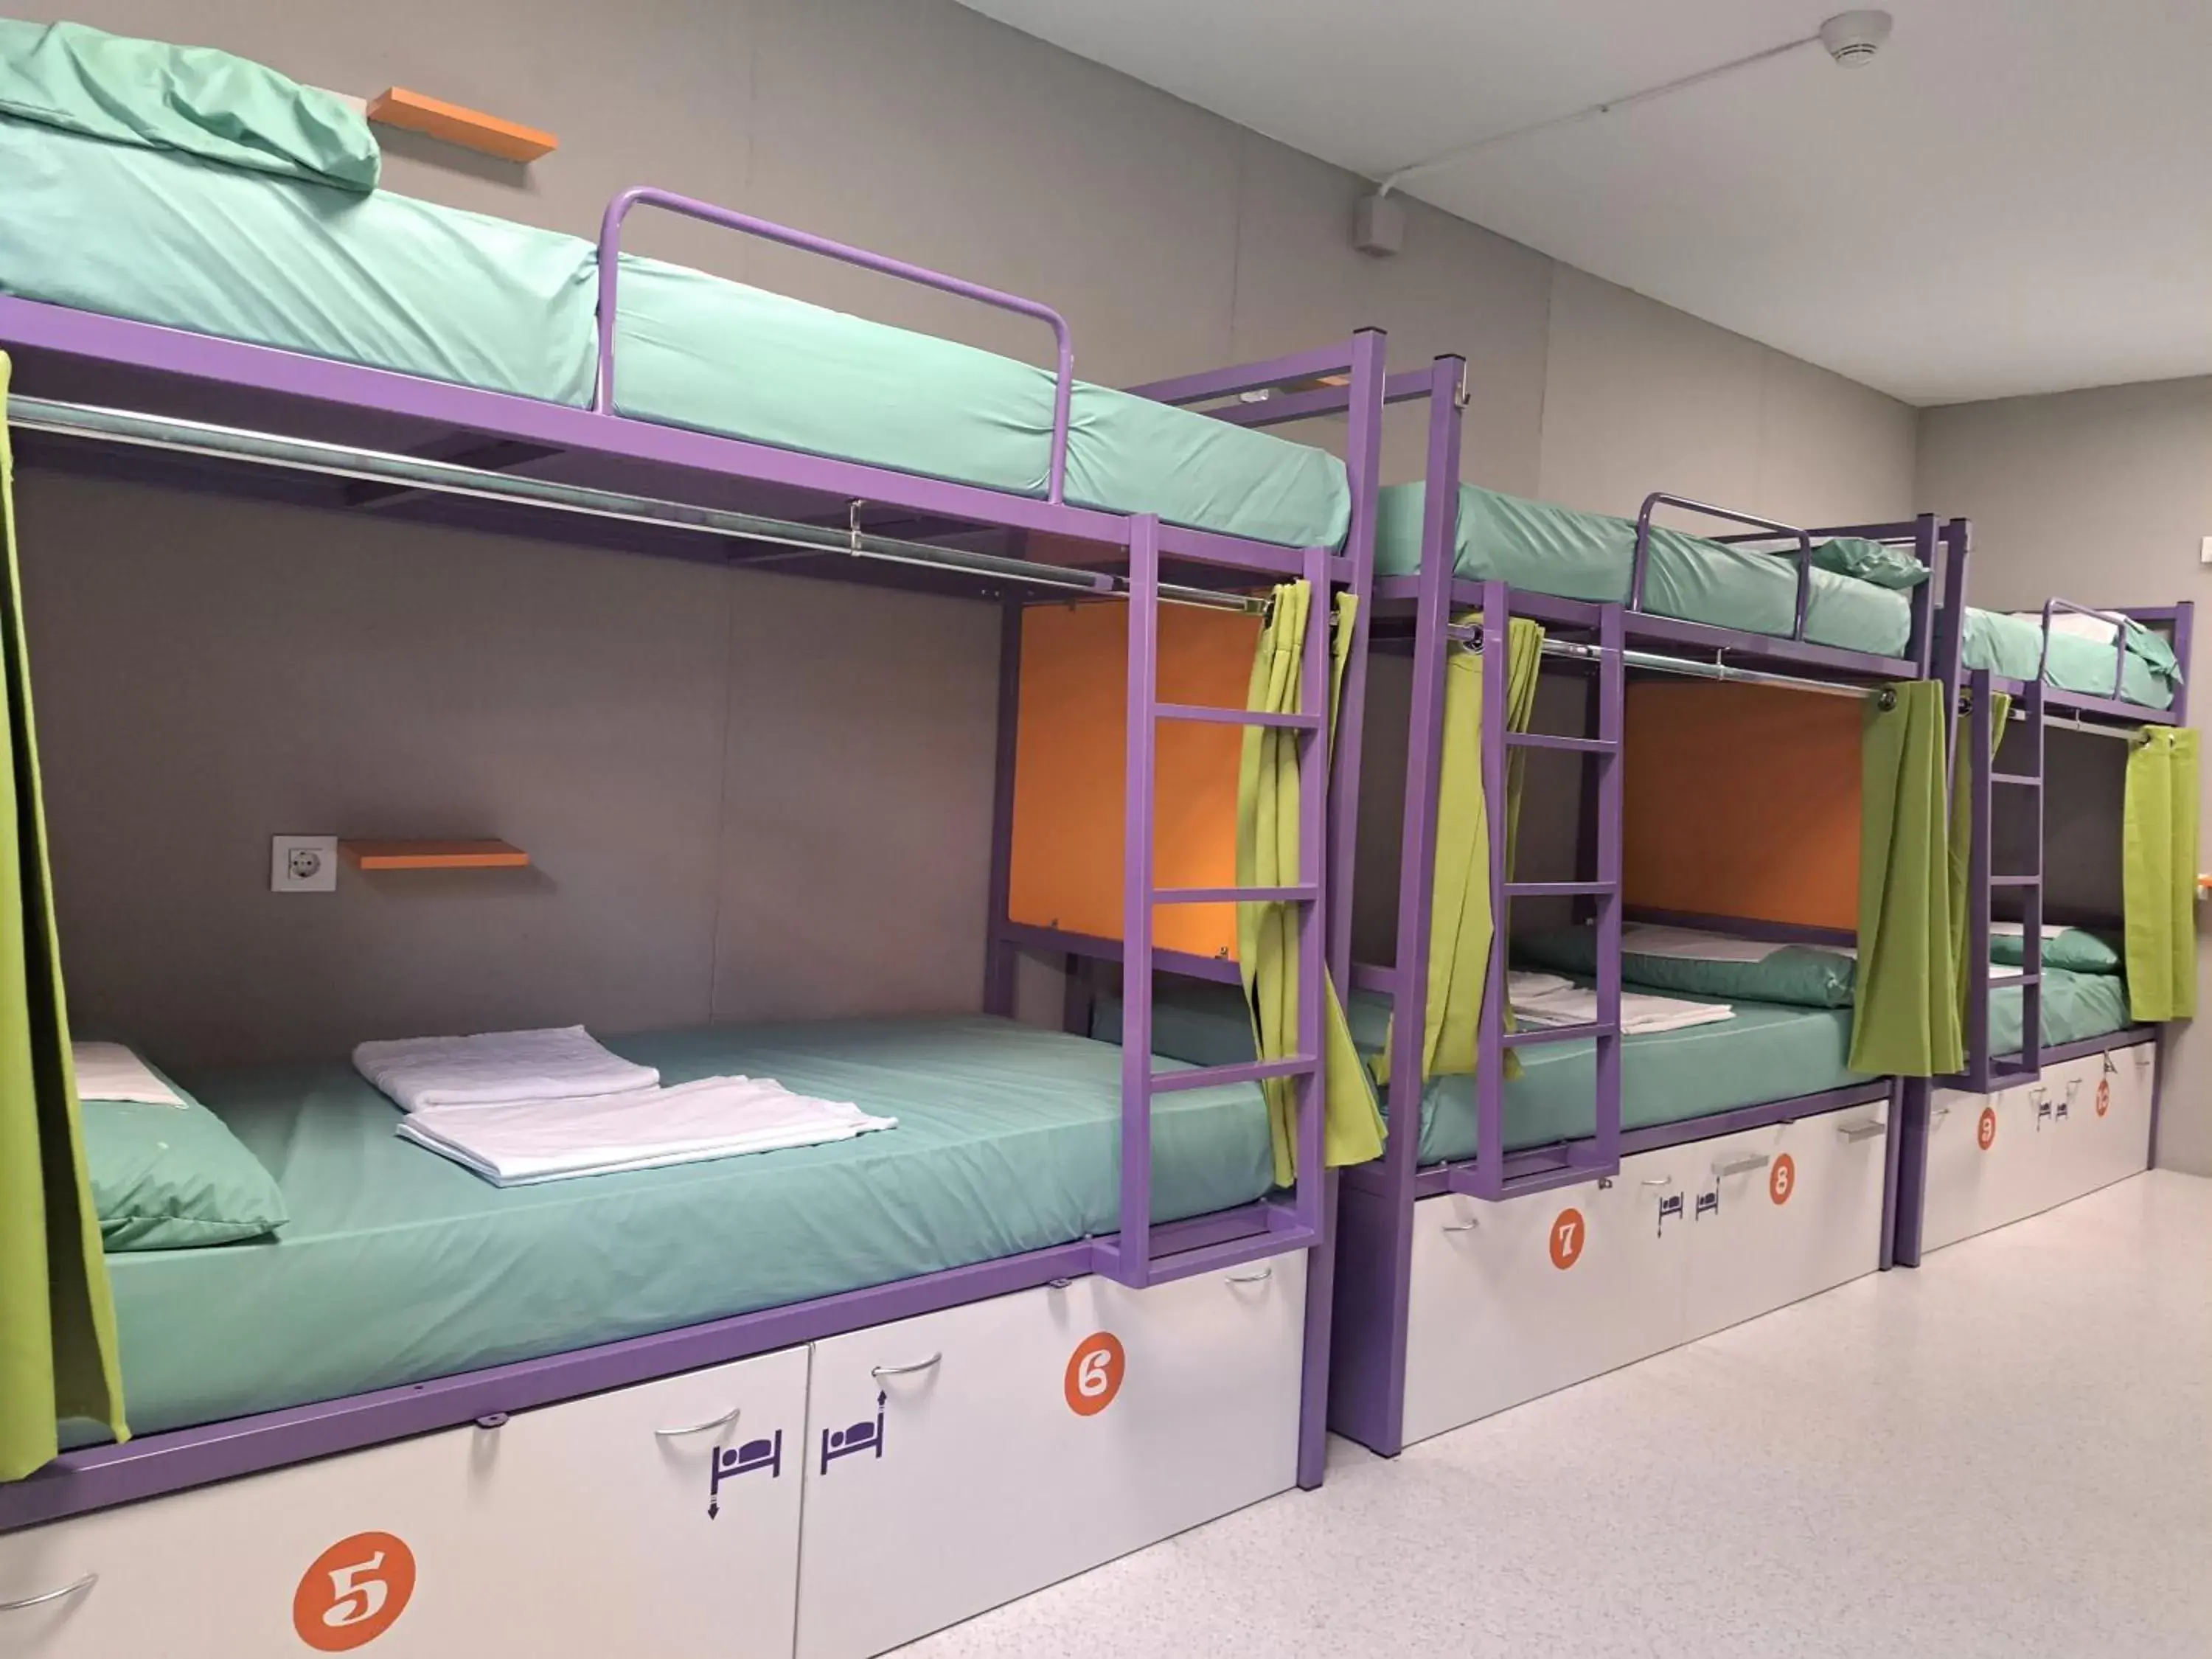 Bedroom, Bed in Scout Madrid Hostel